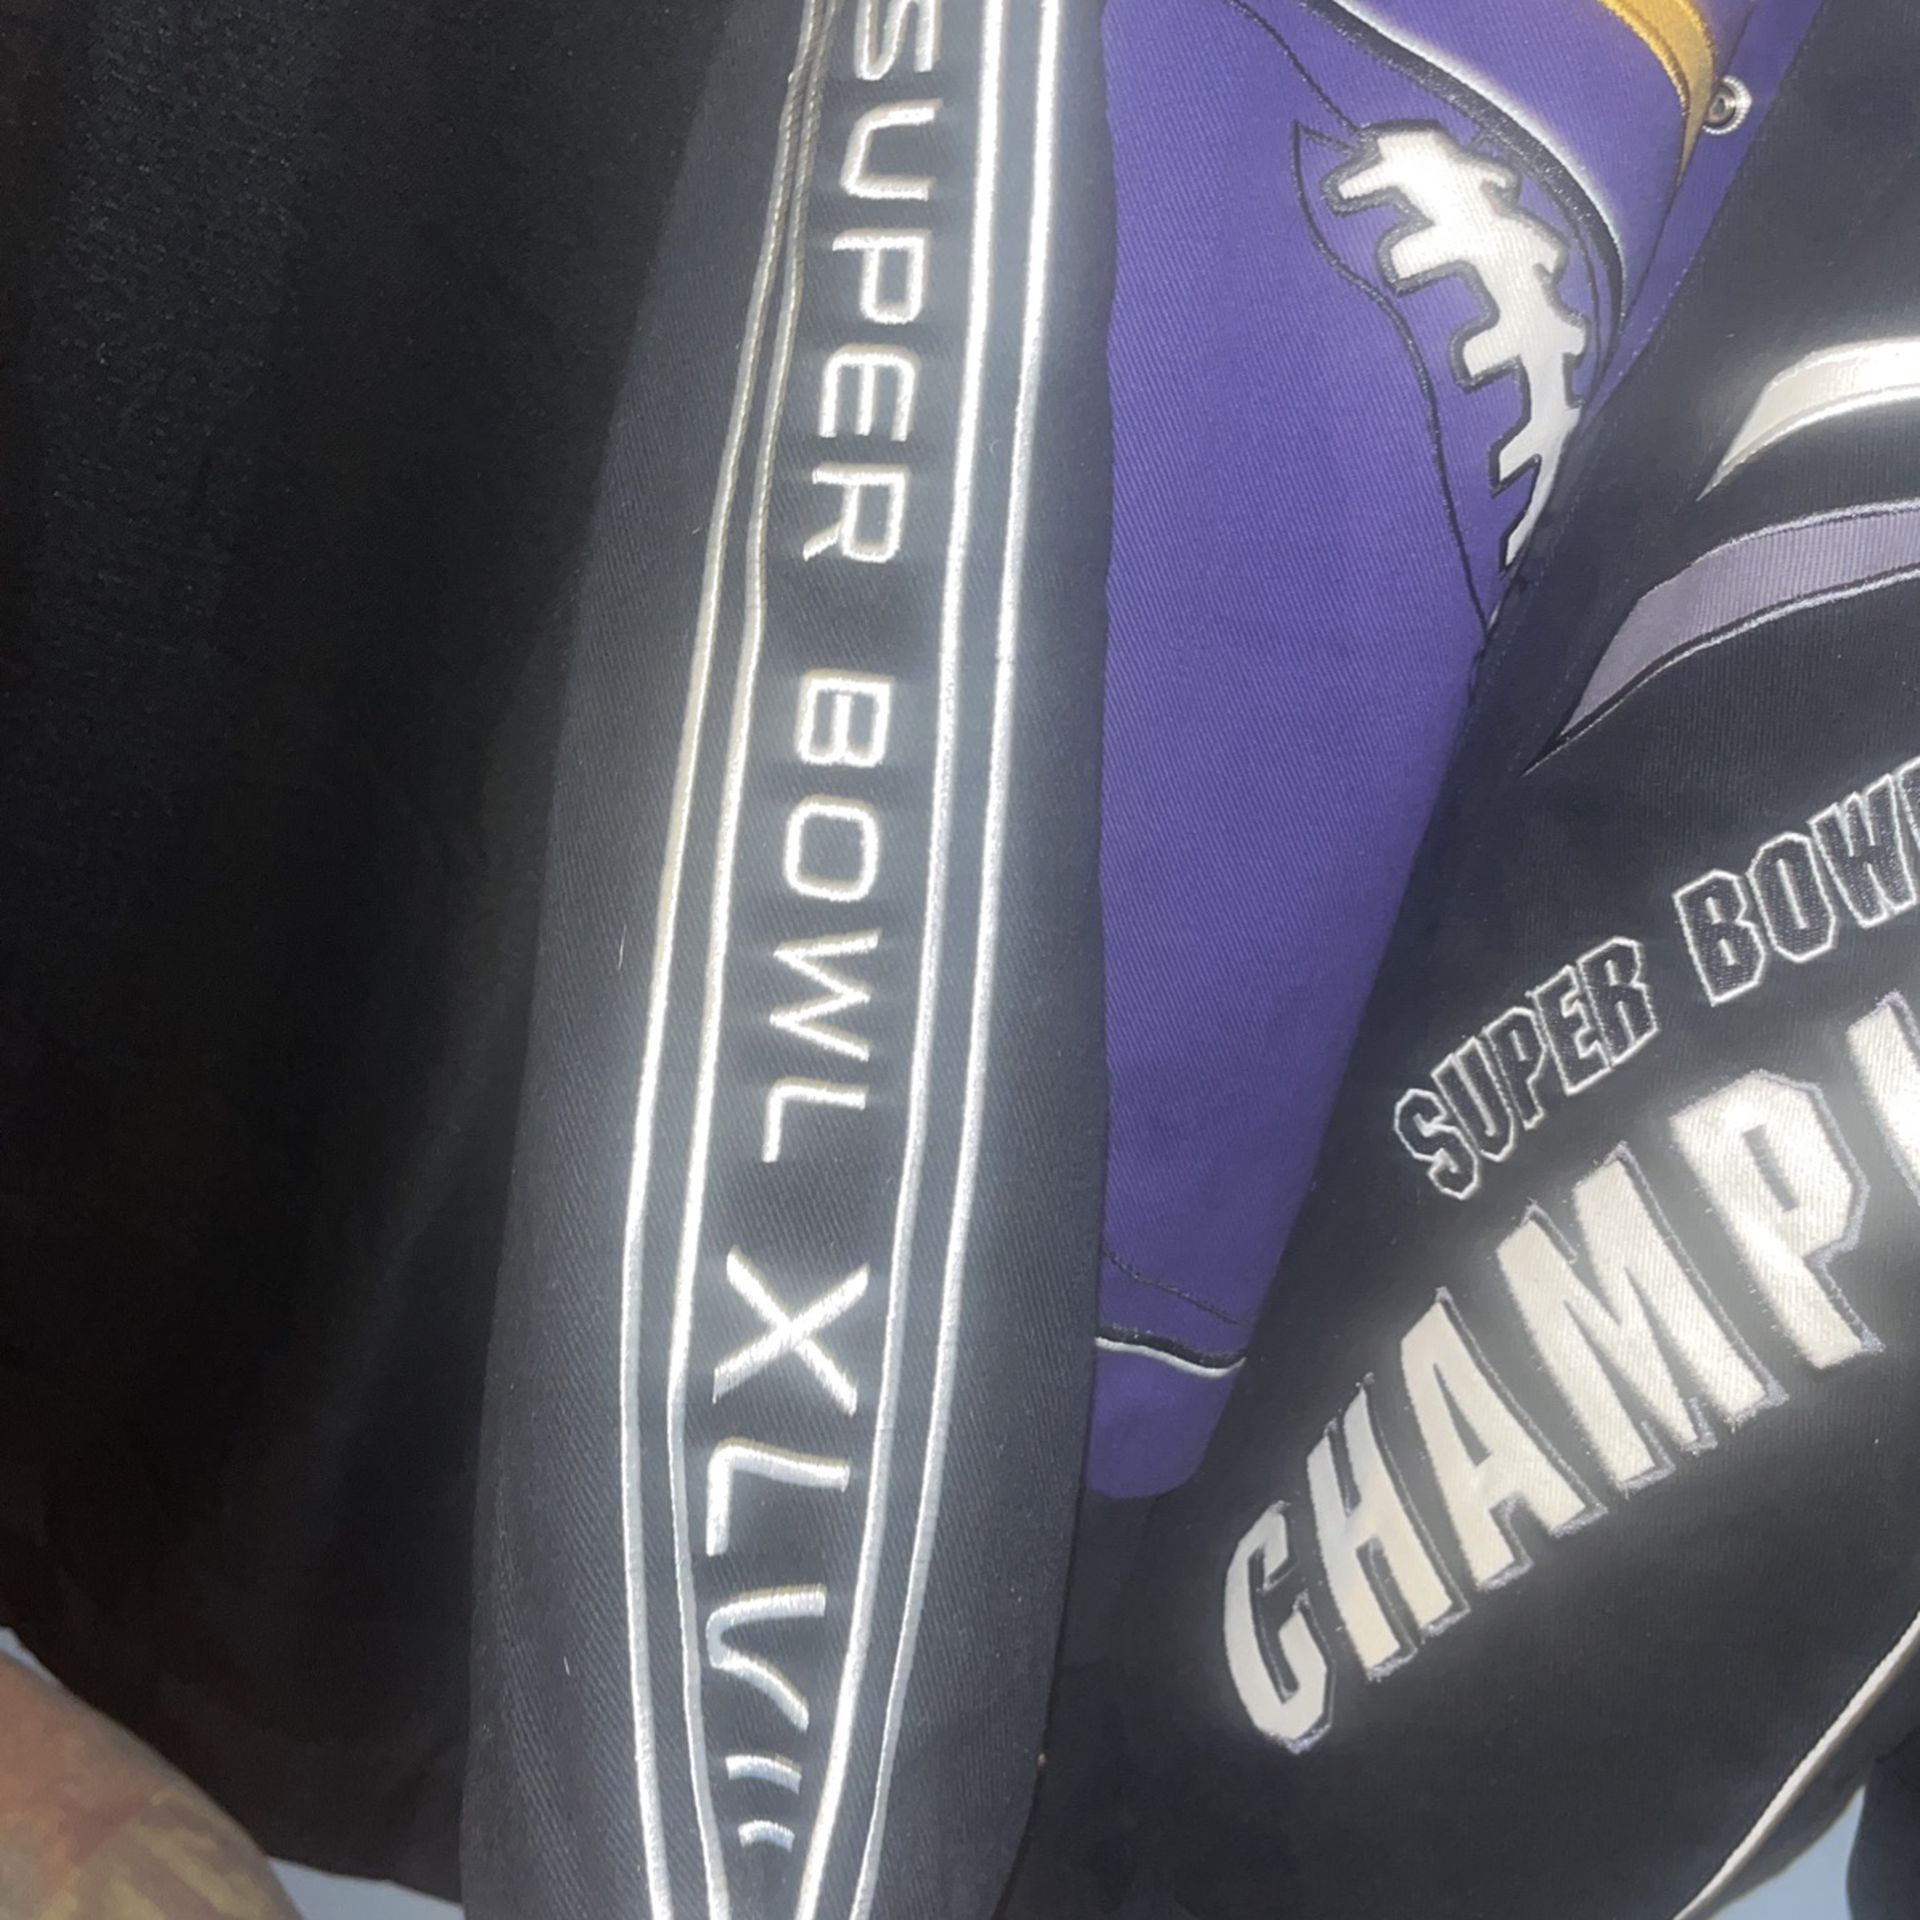 Baltimore Ravens Super bowl XLVII “Champs” Jacket(Official)